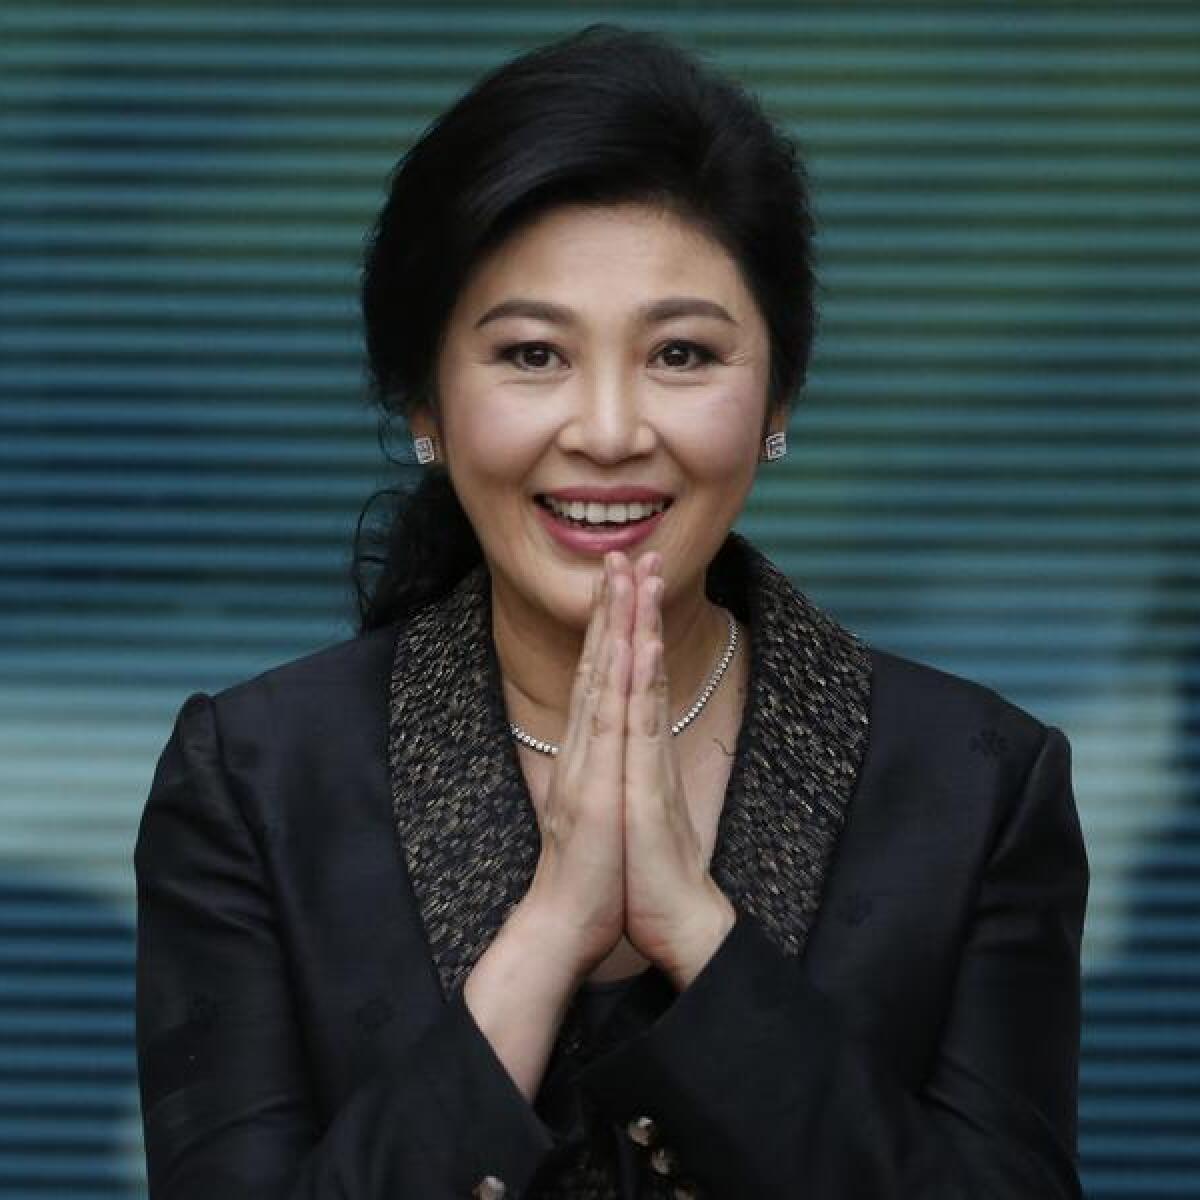 Thailand's former Prime Minister Yingluck Shinawatra